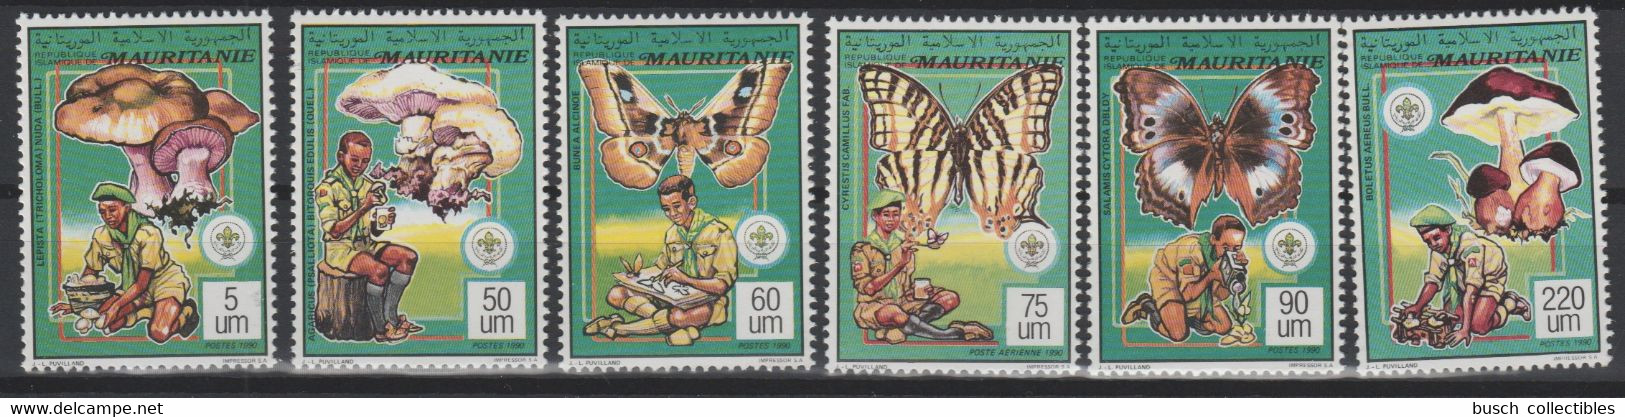 Mauritanie Mauretanien Mauritania 1990 / 1991 Mi. 987 - 992 Scoutisme Scouts Pfadfinder Papillon Schmetterling Butterfly - Schmetterlinge